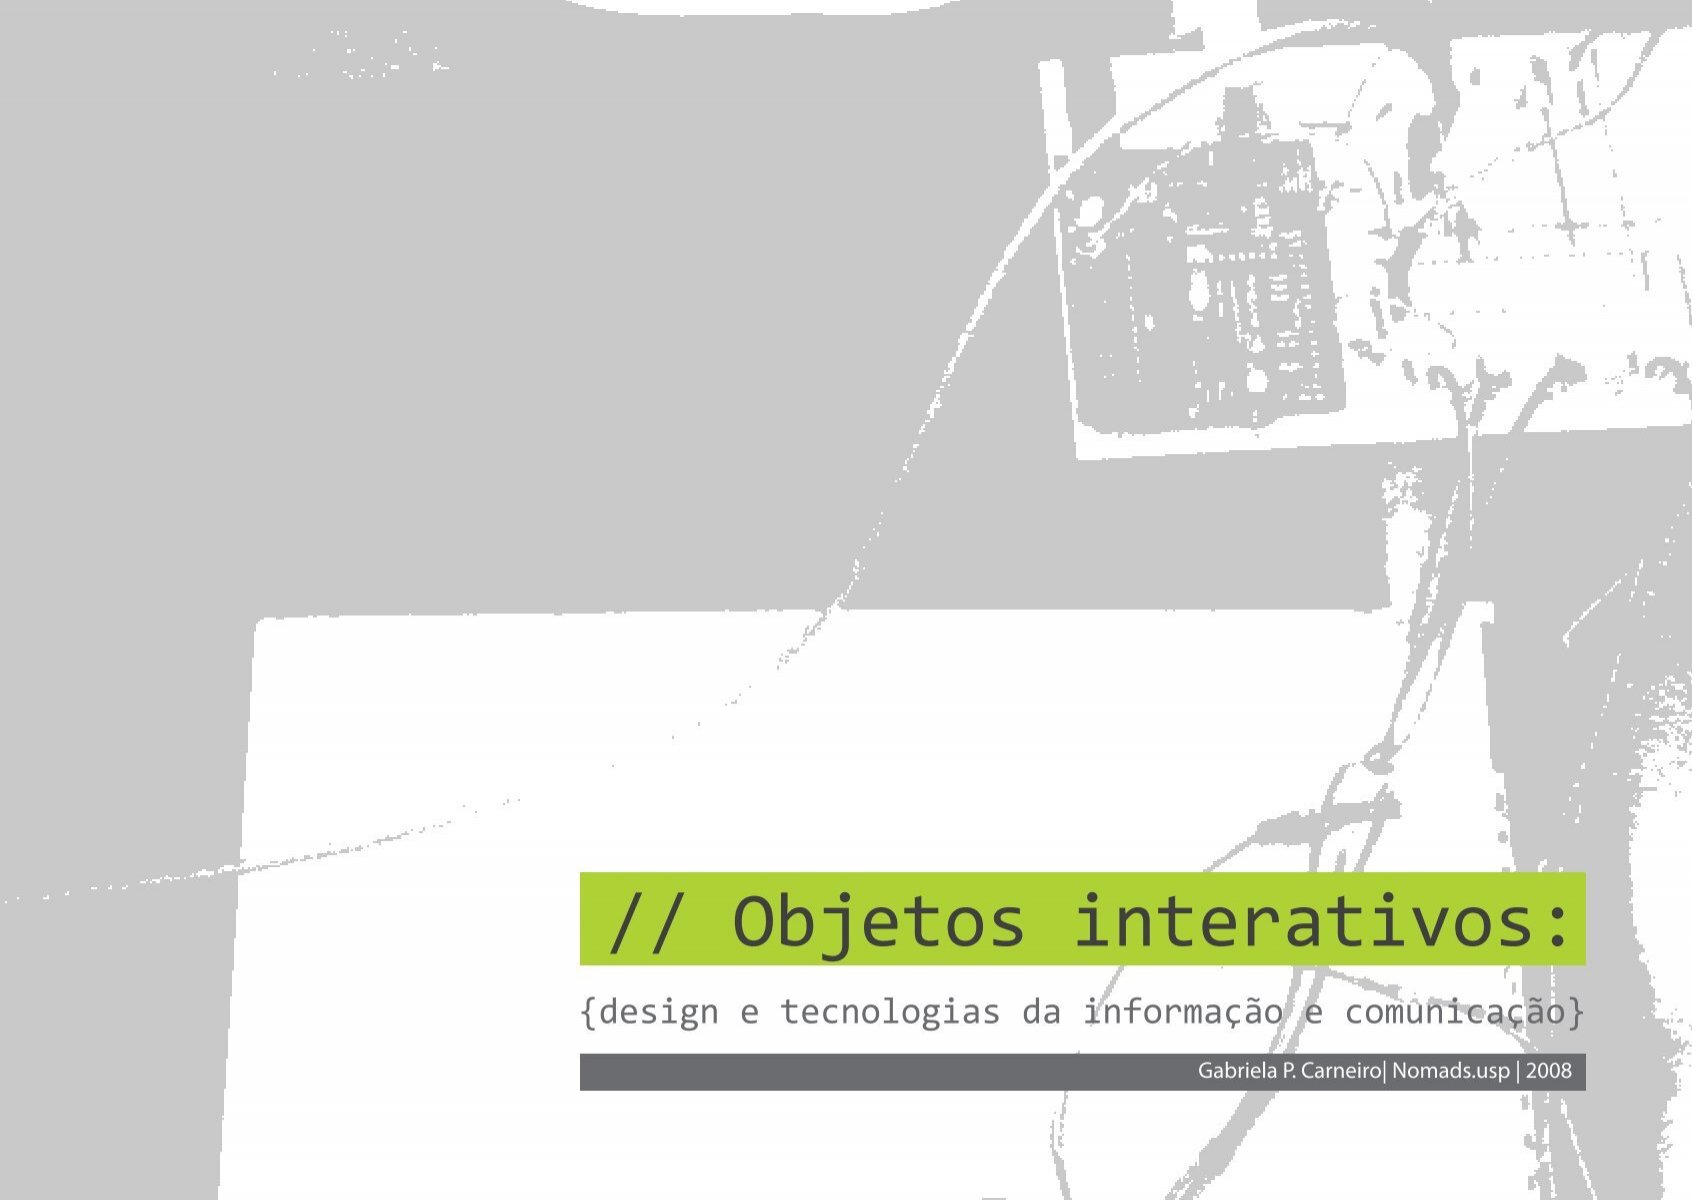 Projeto Brasil 4D fornece interatividade de serviços na TV - 